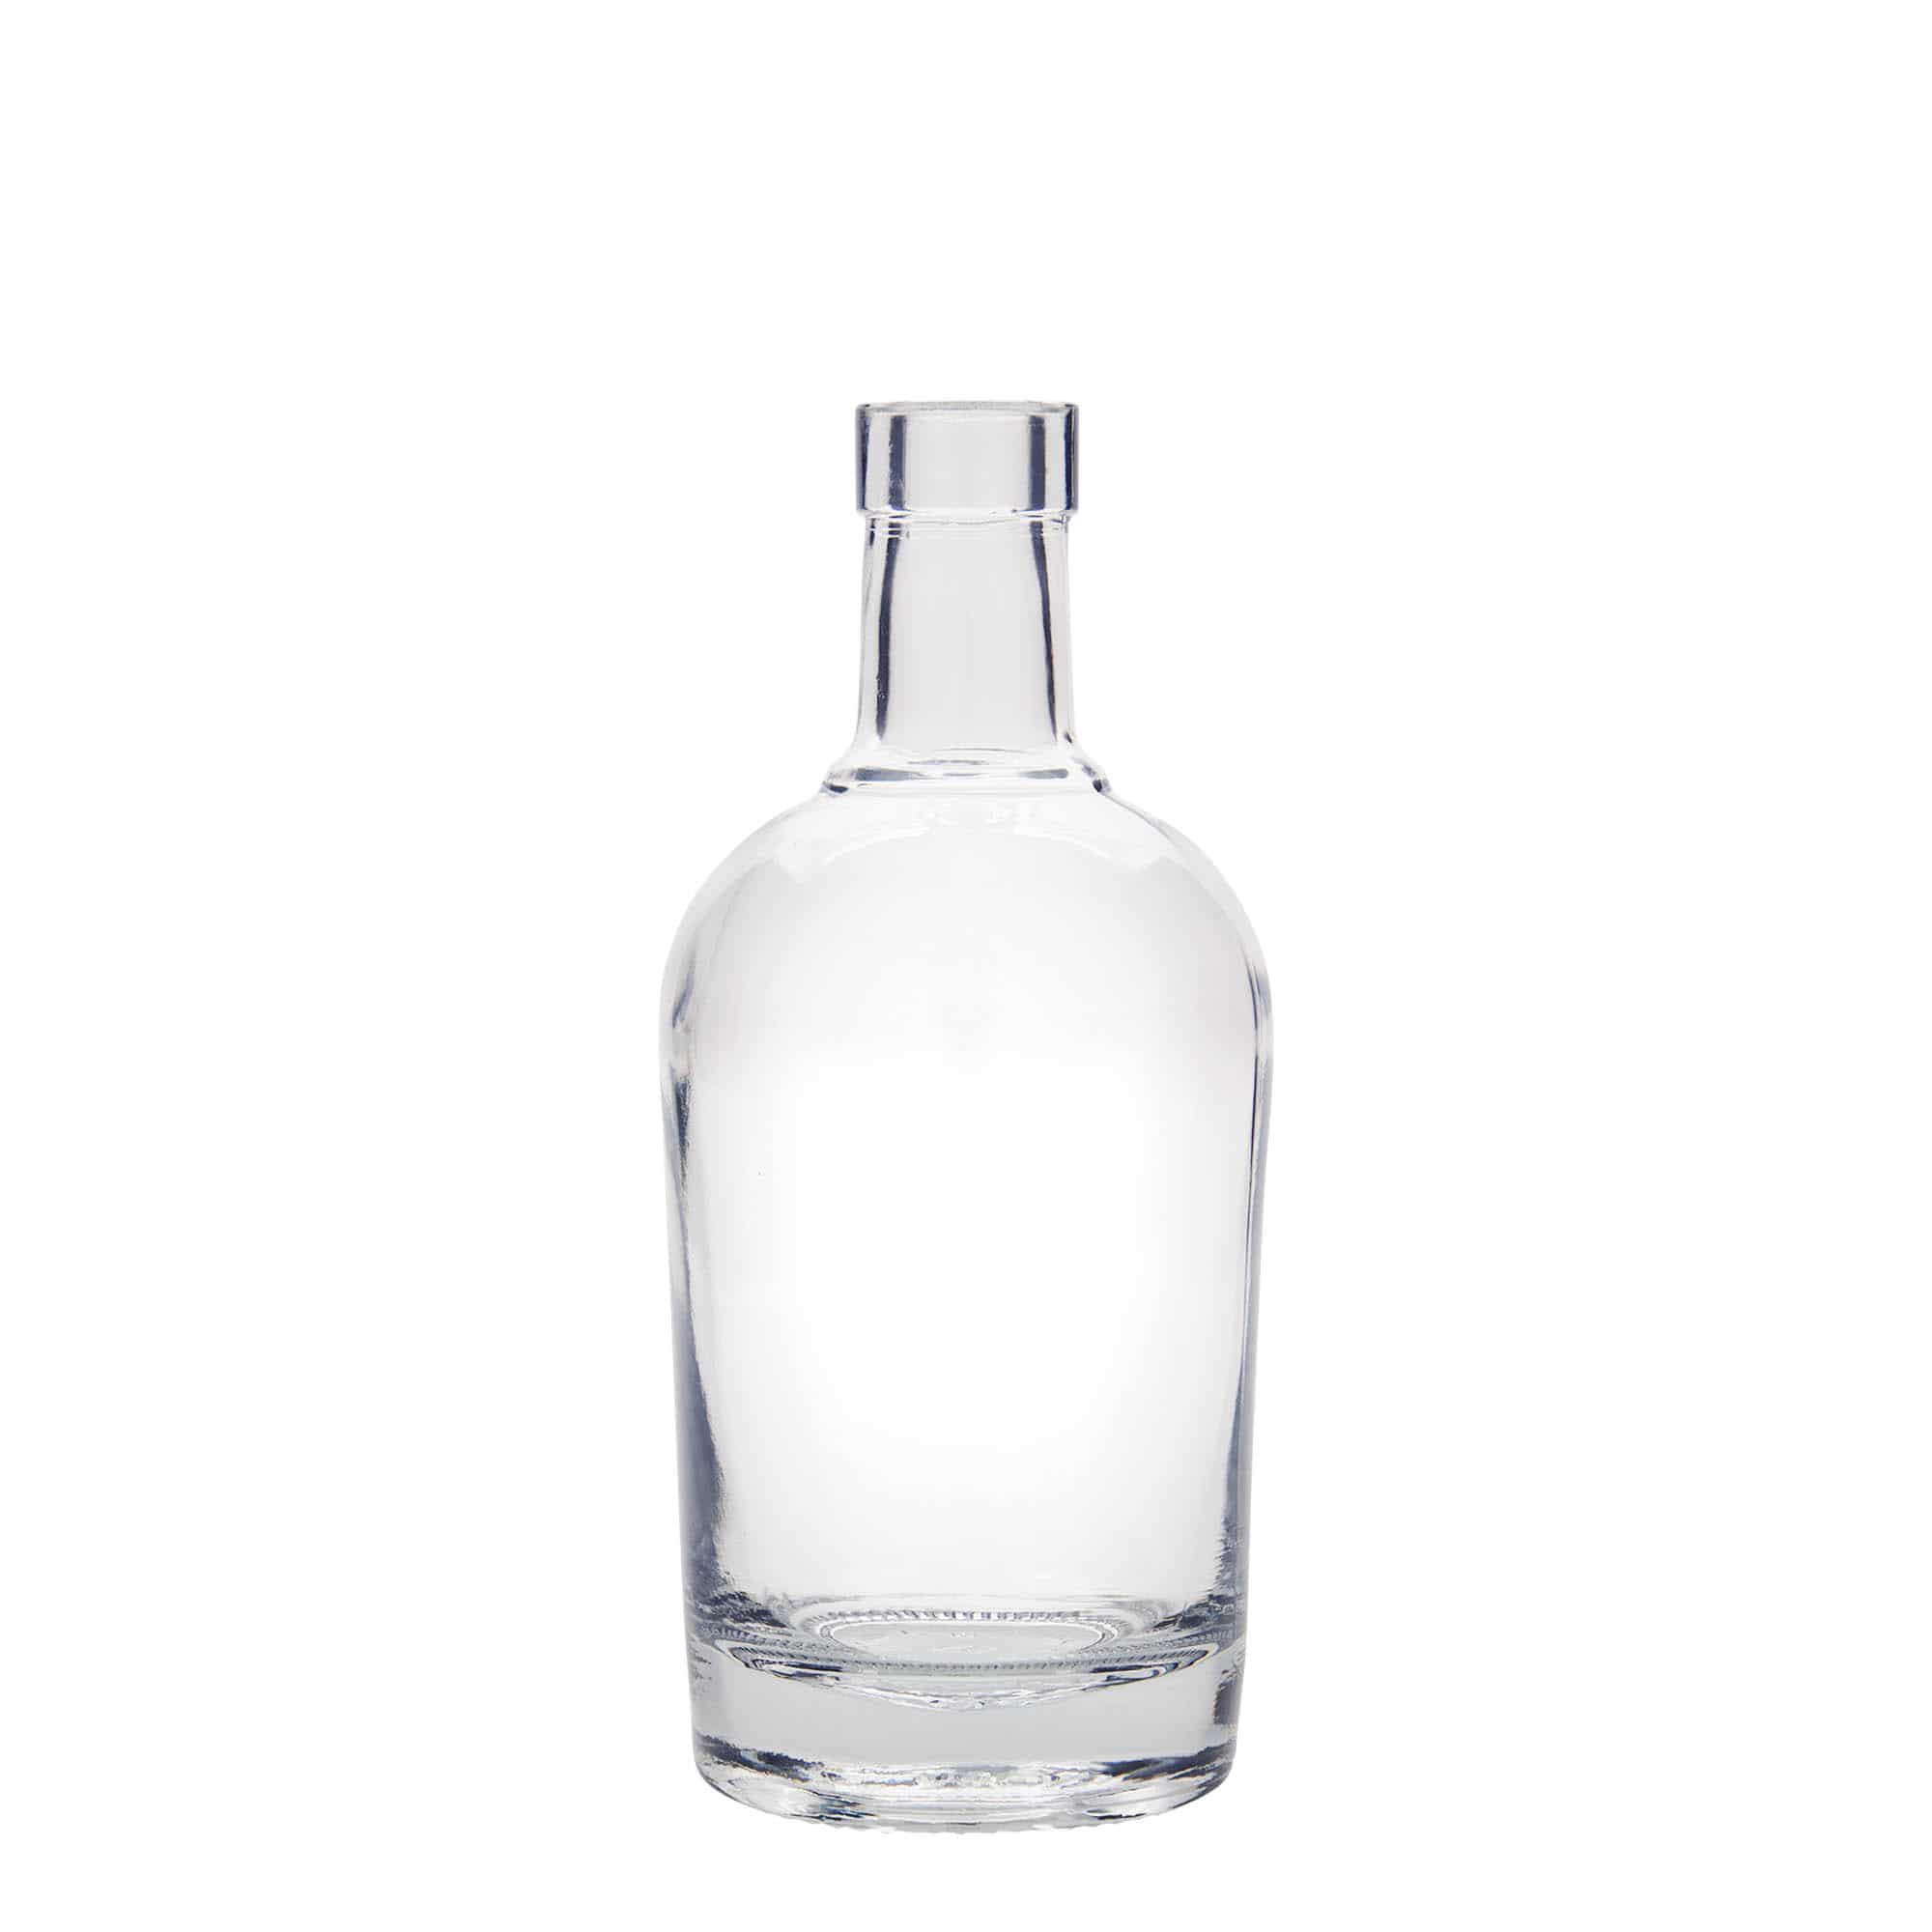 500 ml glass bottle 'Amarillo', closure: cork